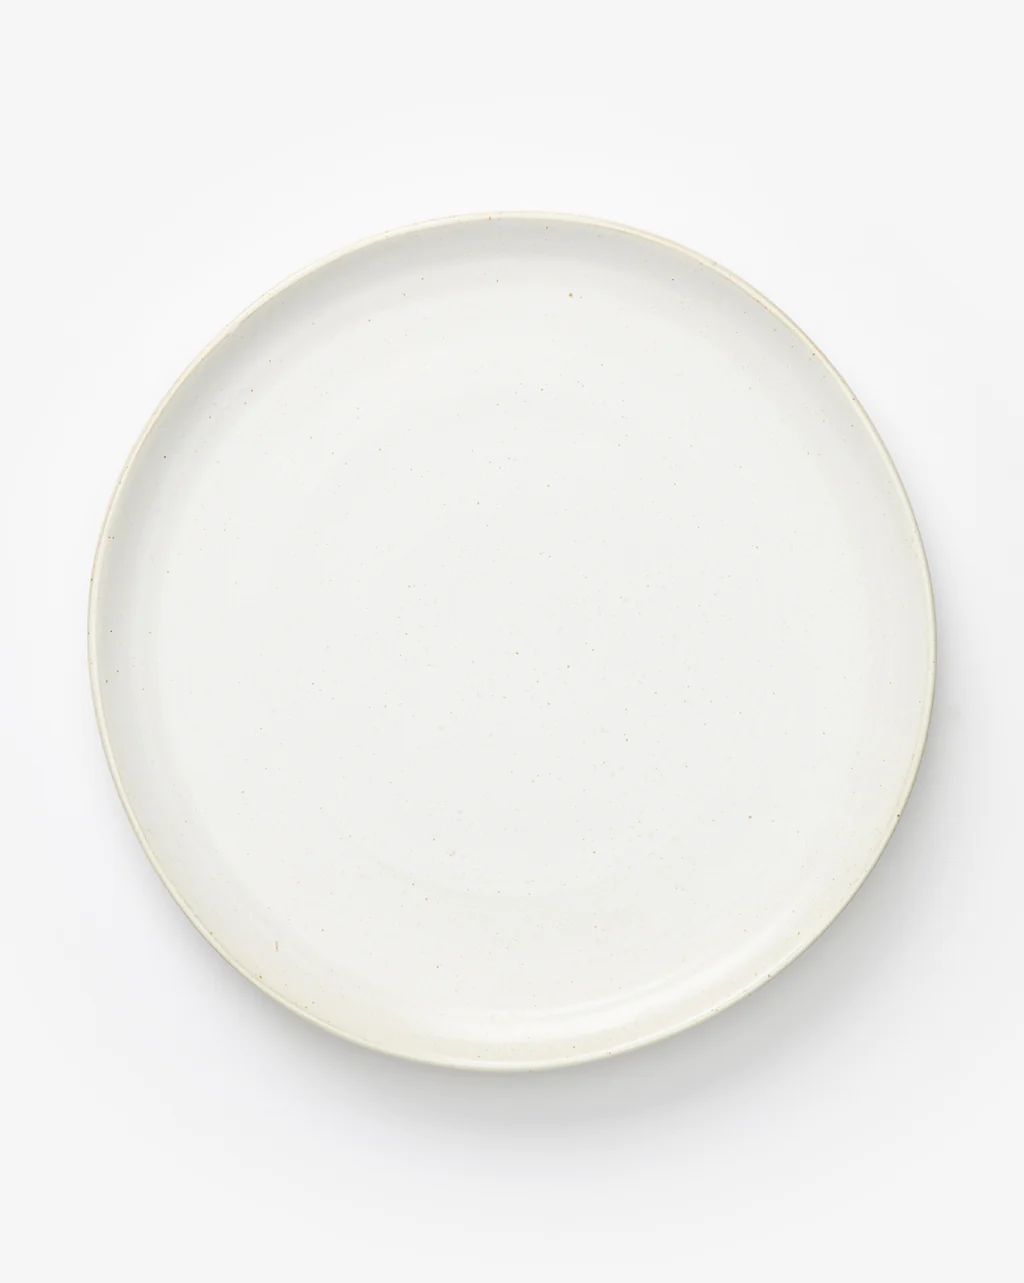 White & Gray Speckled Porcelain Dinner Plate | McGee & Co.